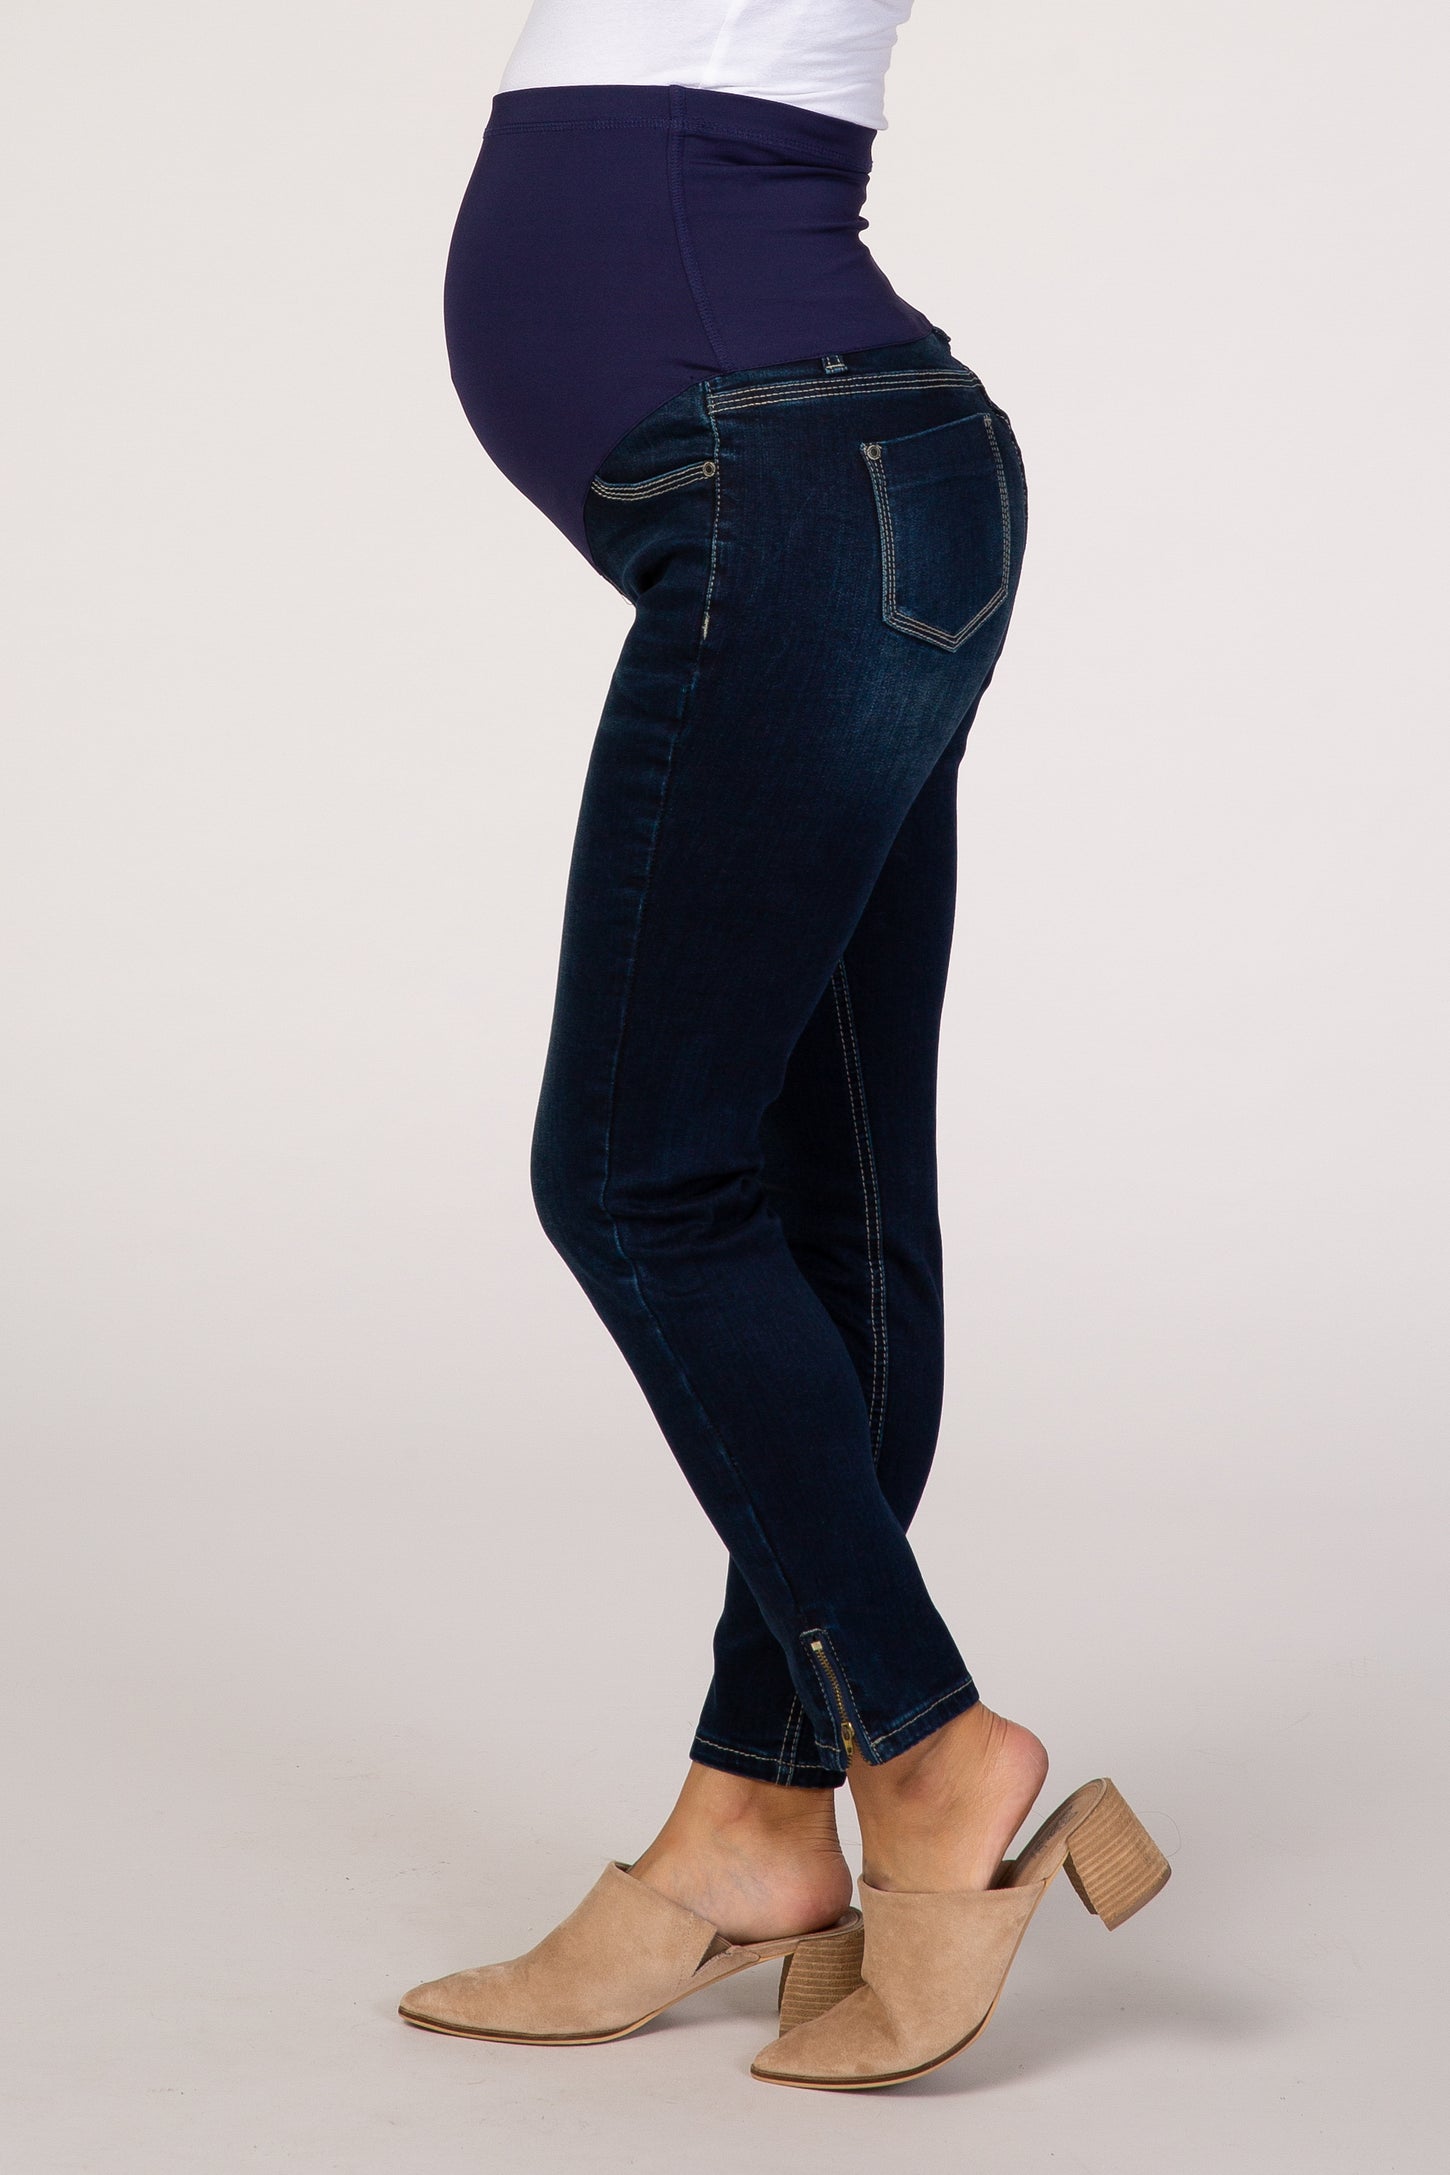 PinkBlush Blue Zipper Leg Maternity Jean